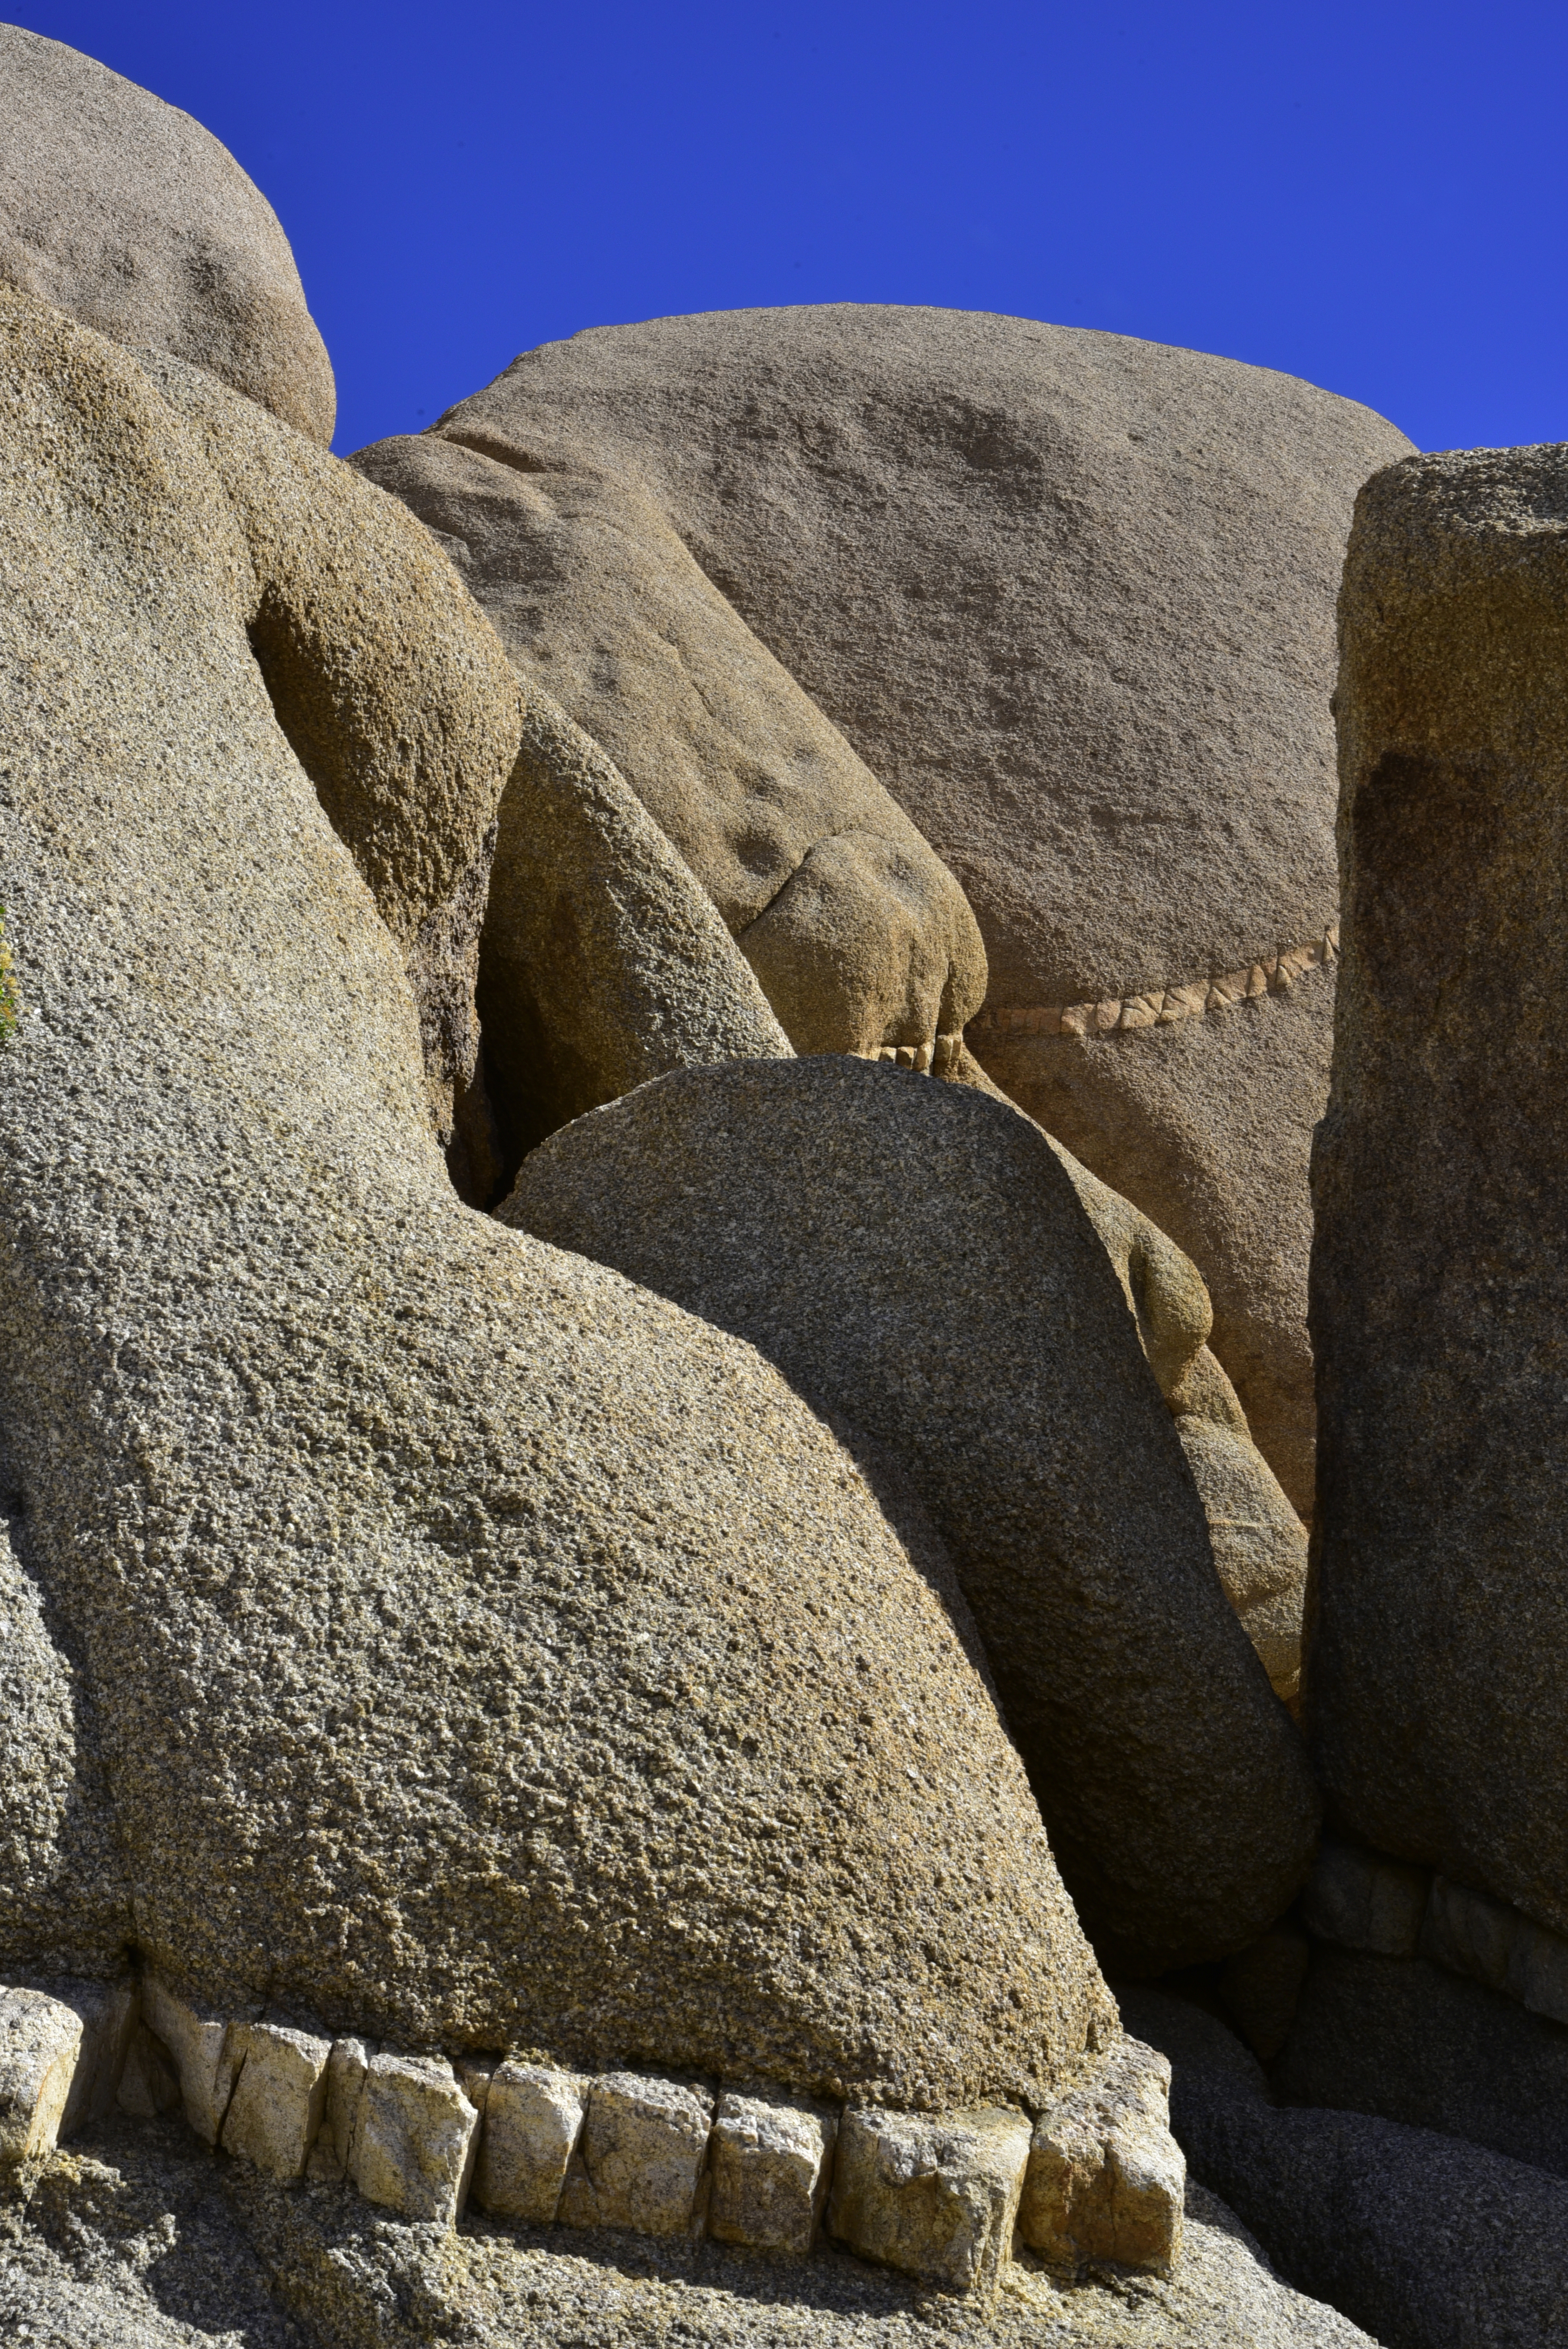 Quartz intrusion veins in granite rocks  -  Live Oak Picnic Area, Joshua Tree National Park, California  